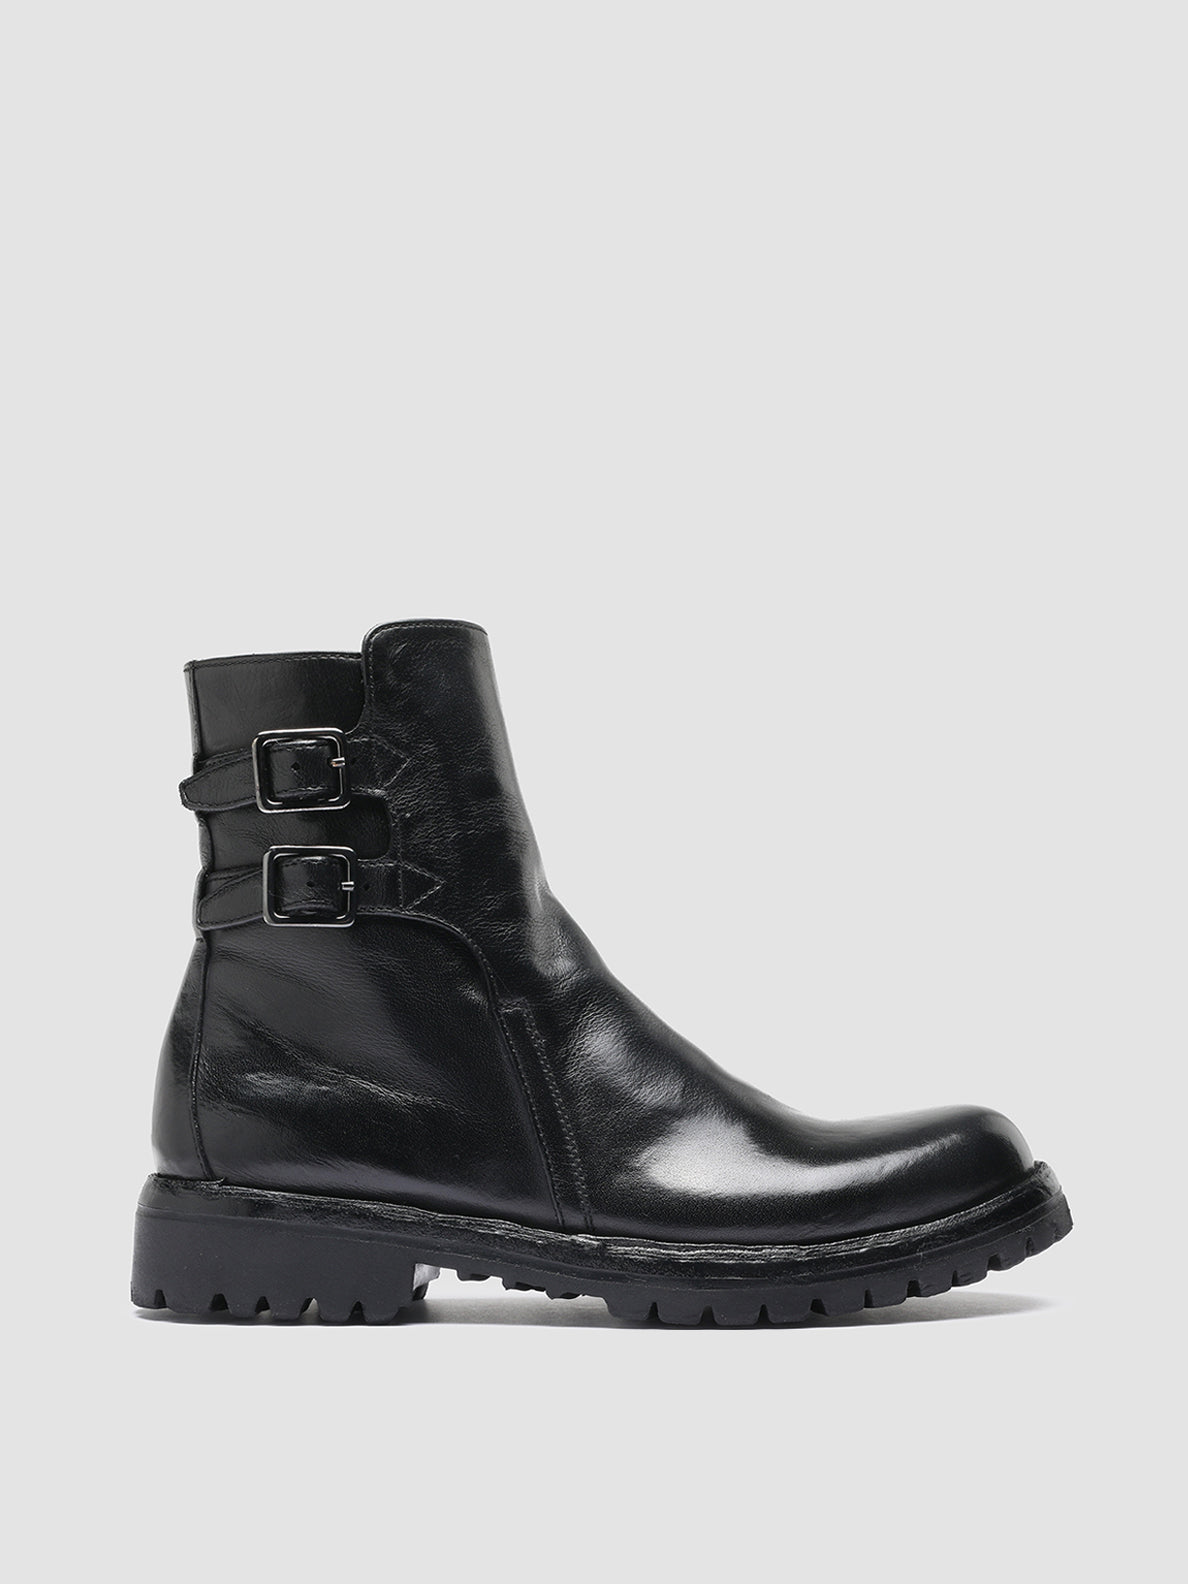 Women's Black Leather Boots LORAINE 002 – Officine Creative EU